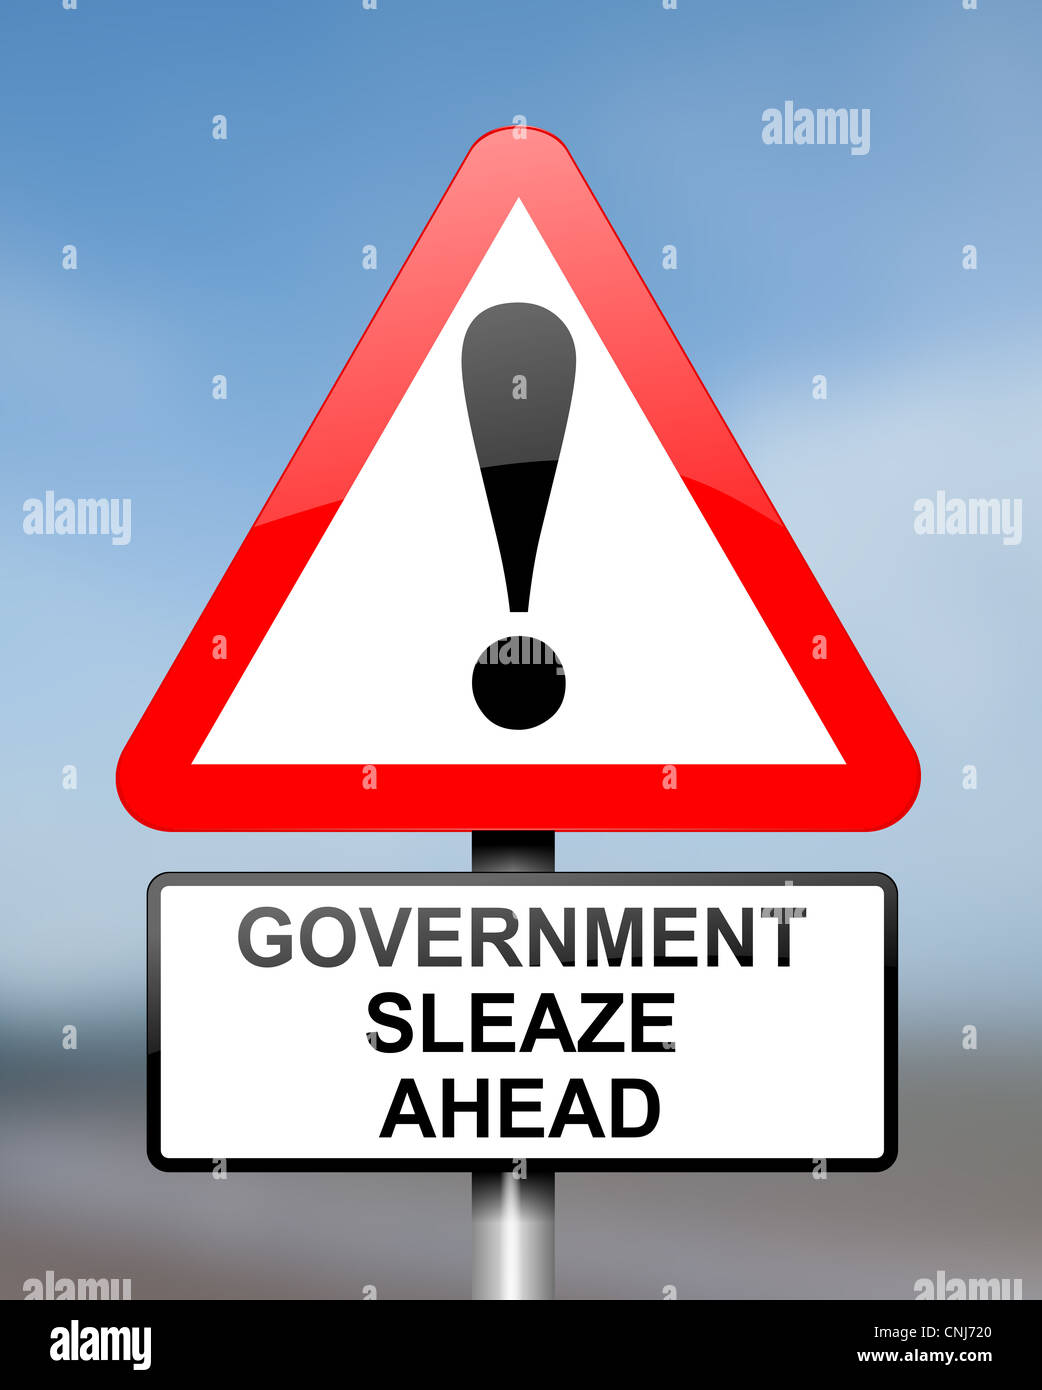 Government sleaze. Stock Photo